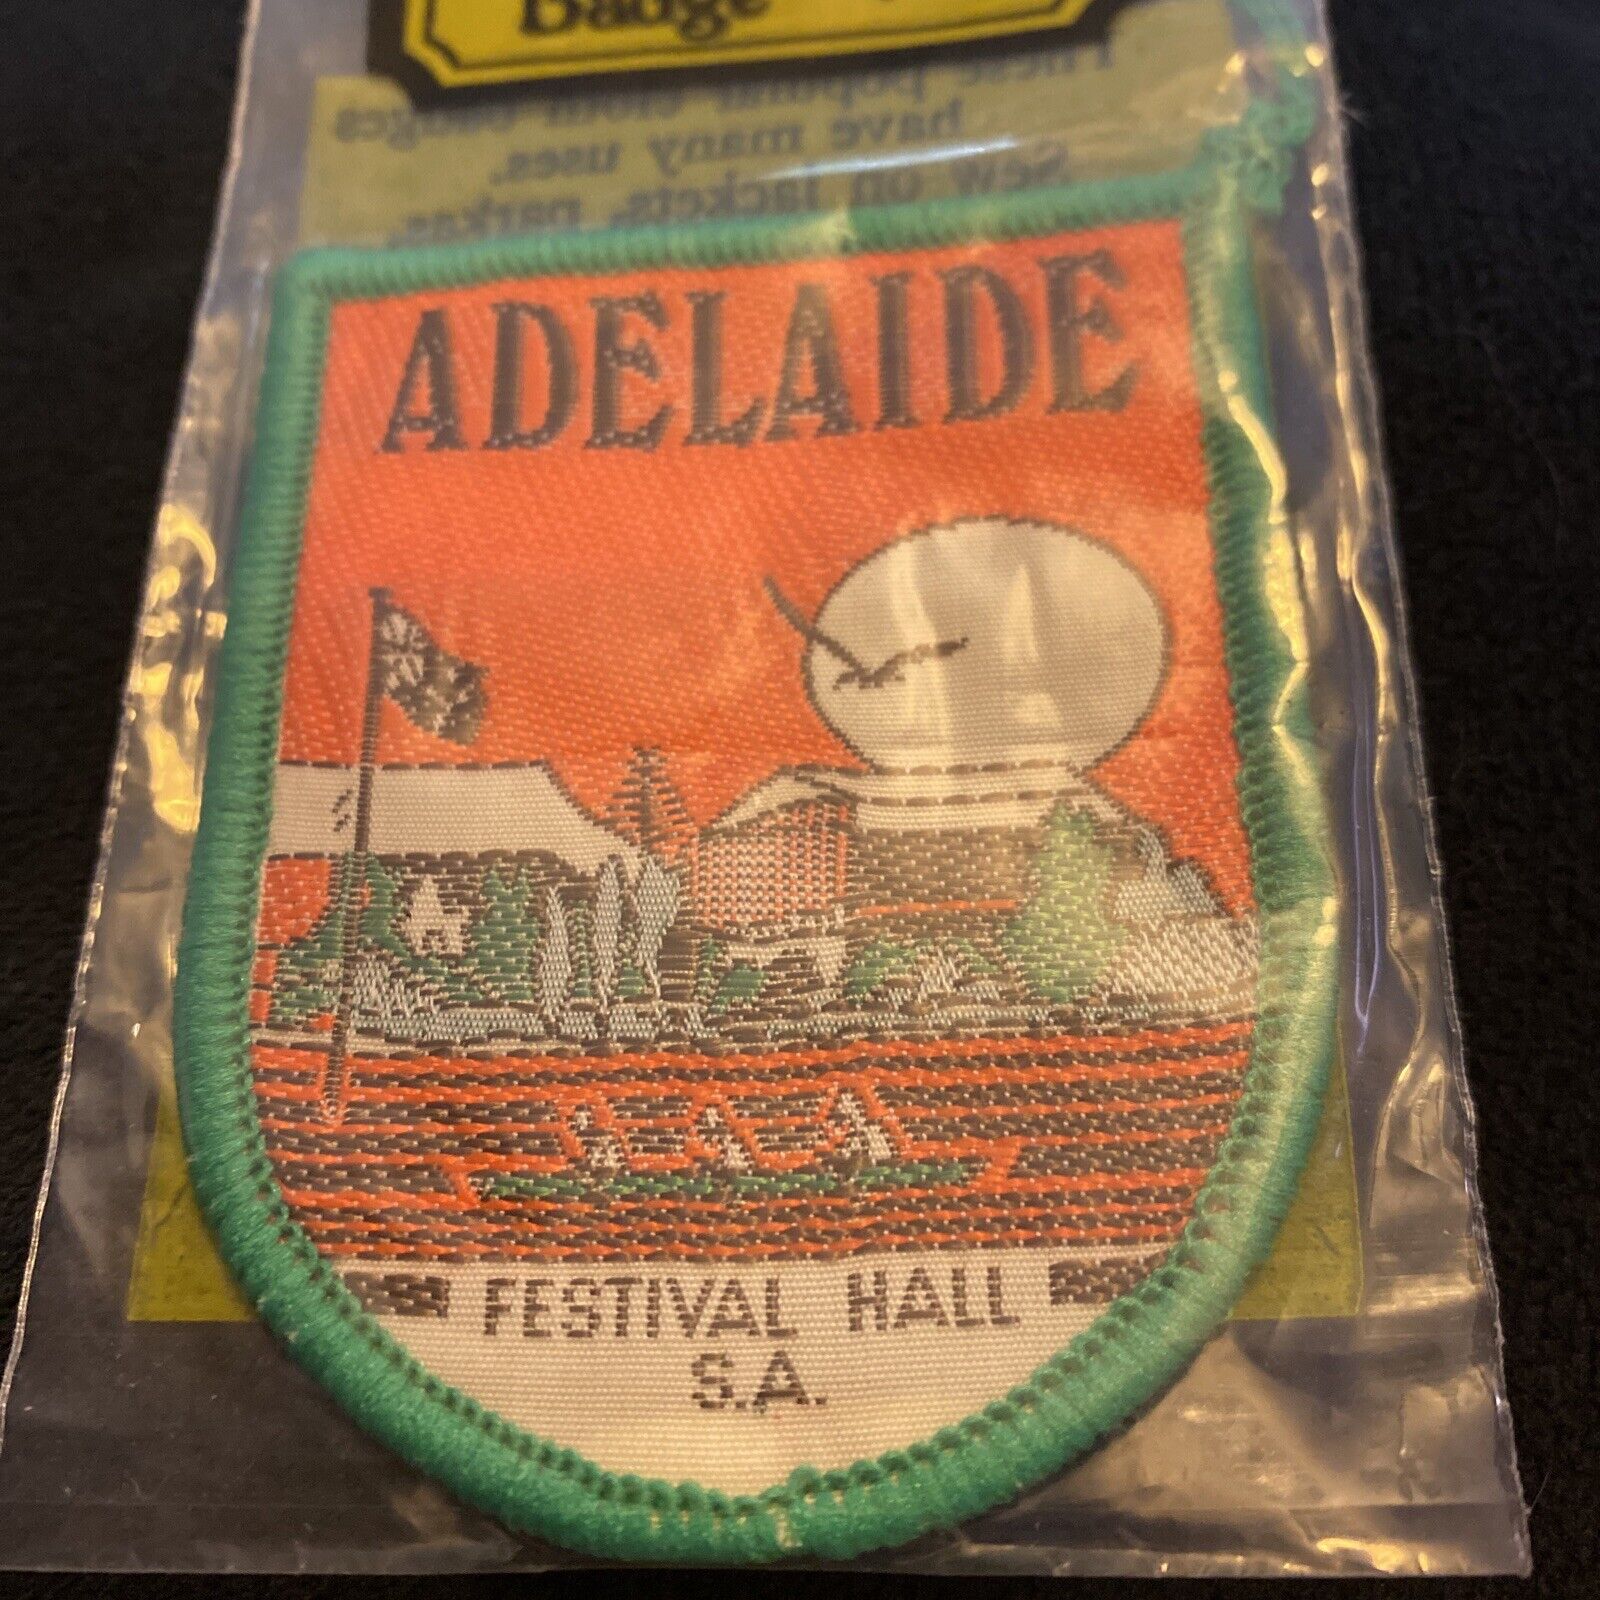 VTG ADELAIDE Festival Hall South Australia Sew On Patch